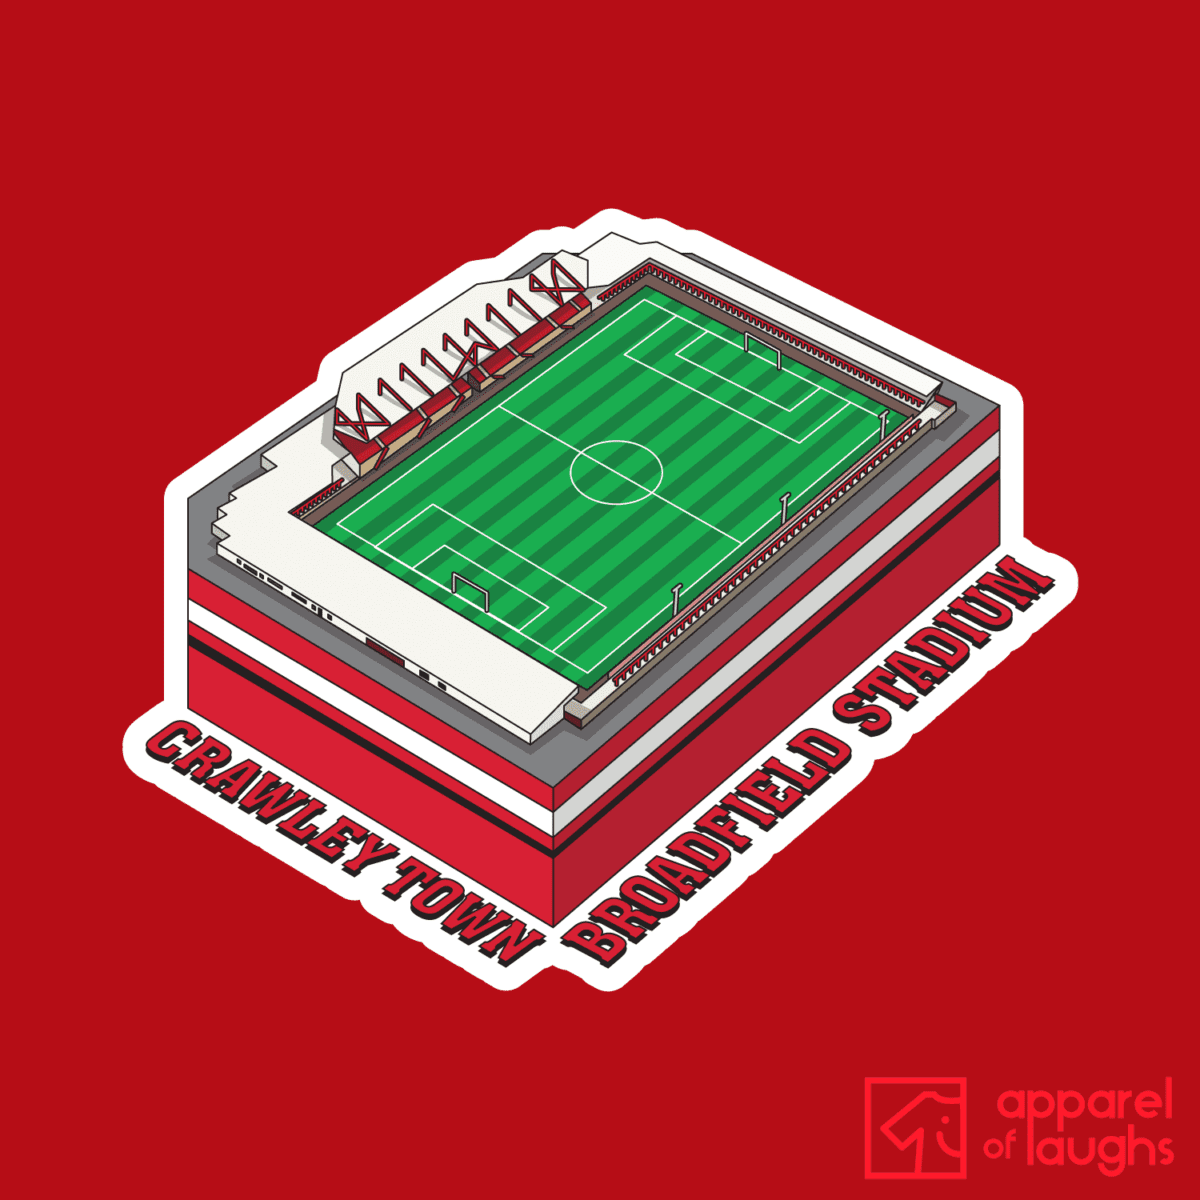 Crawley Town Broadfield Stadium Football Illustration T Shirt Design Red